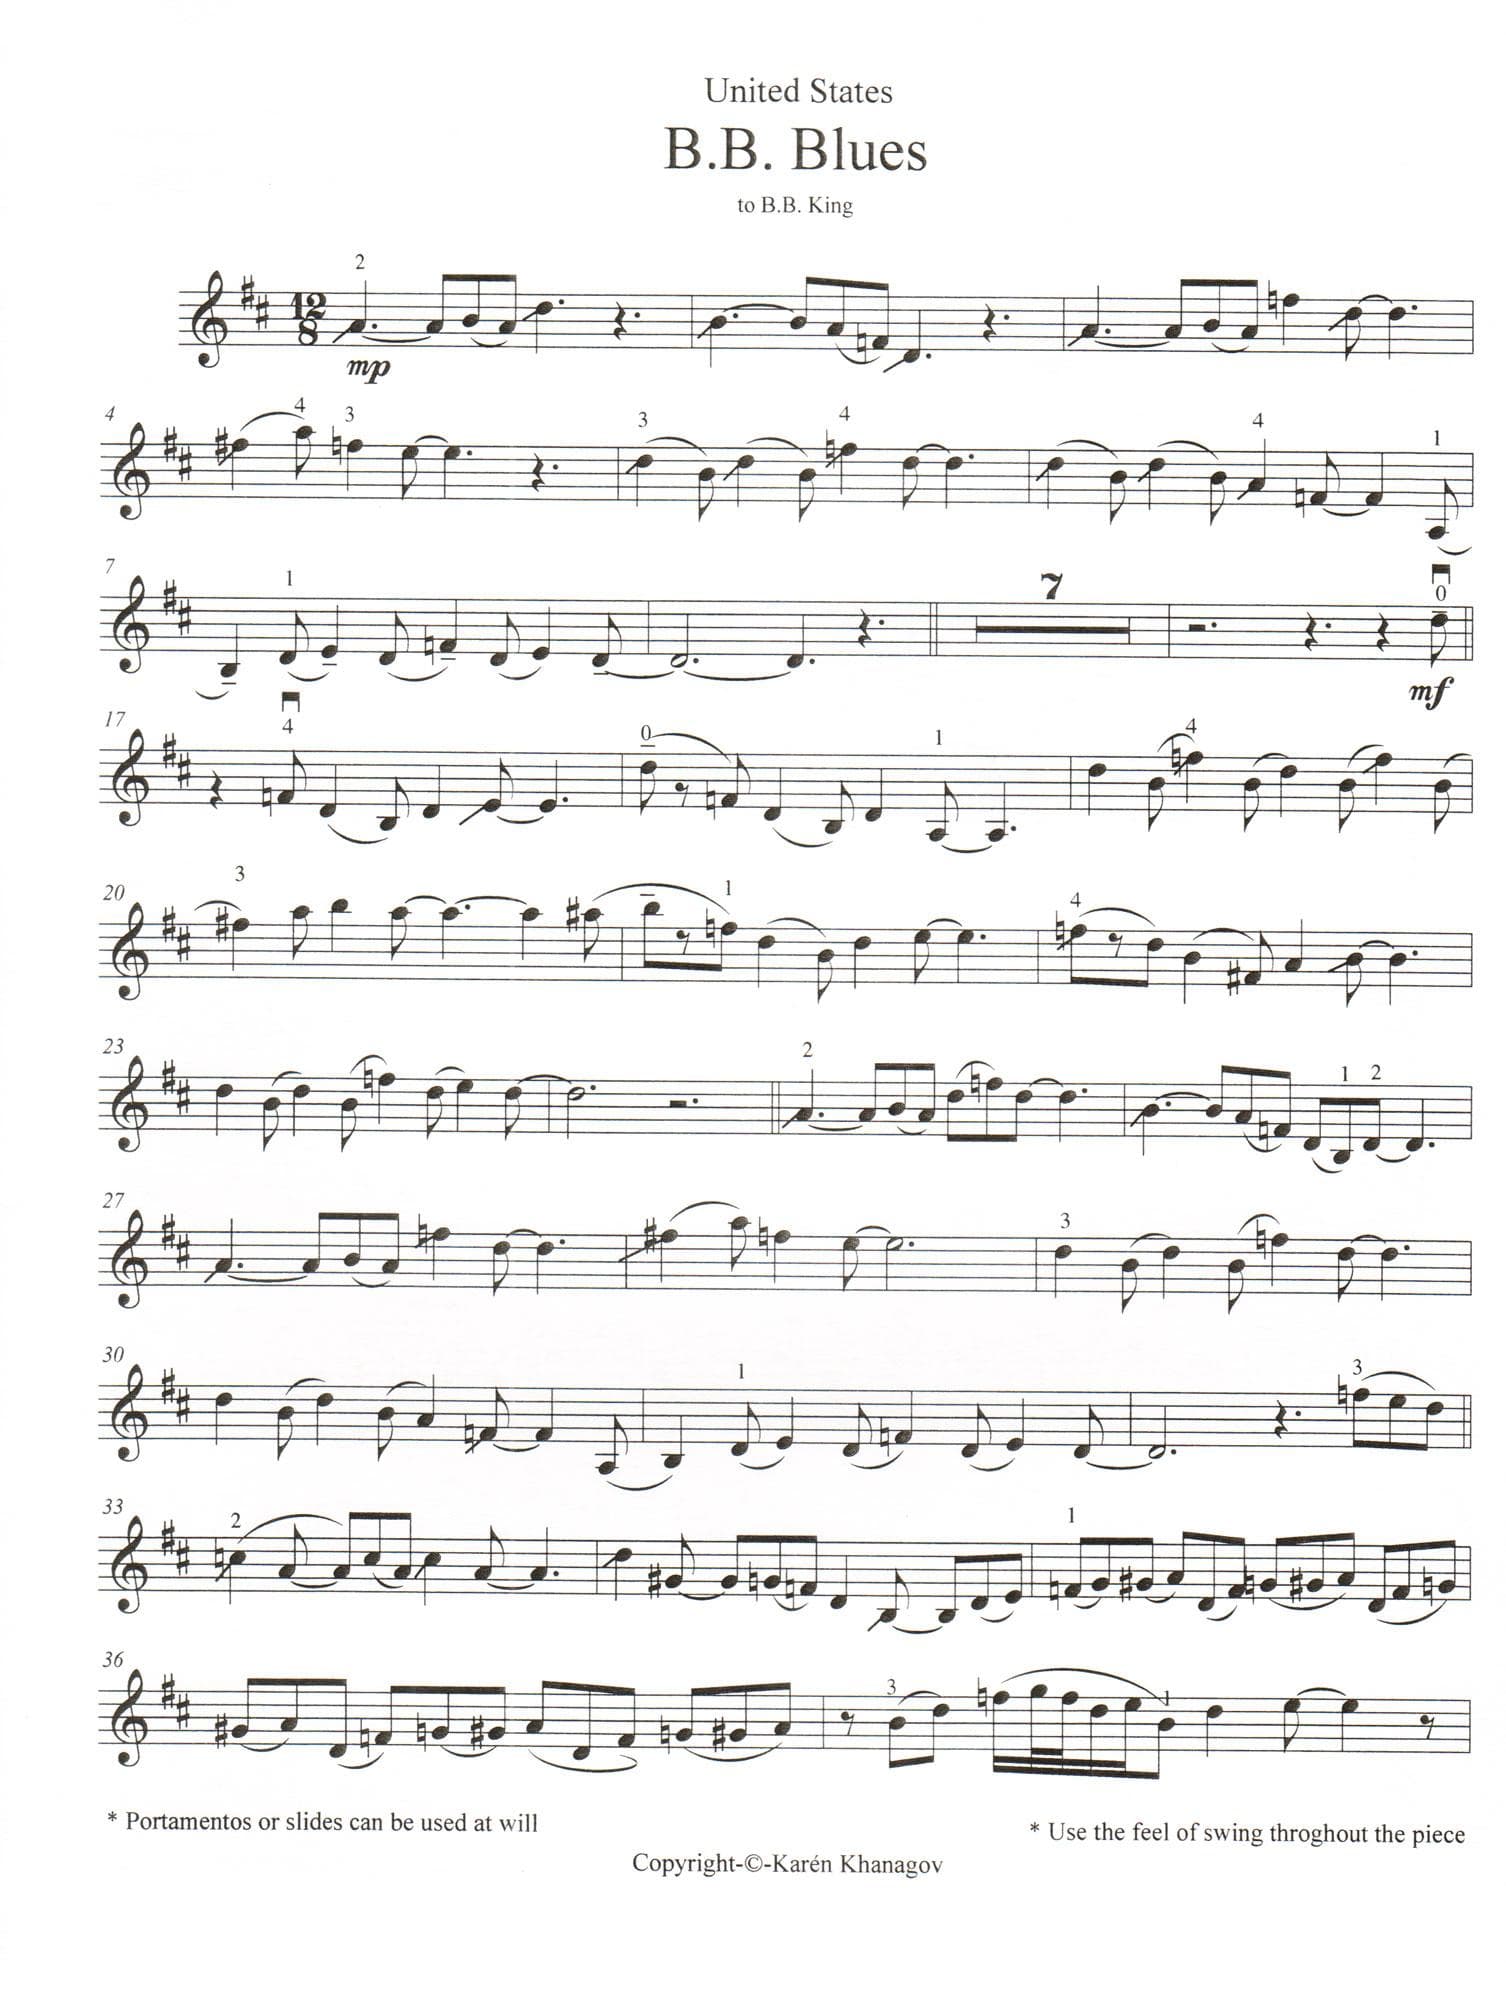 Khanagov, Karén - B.B. Blues - United States from Parade of Nations - for Violin and Piano - Hanaga Publication